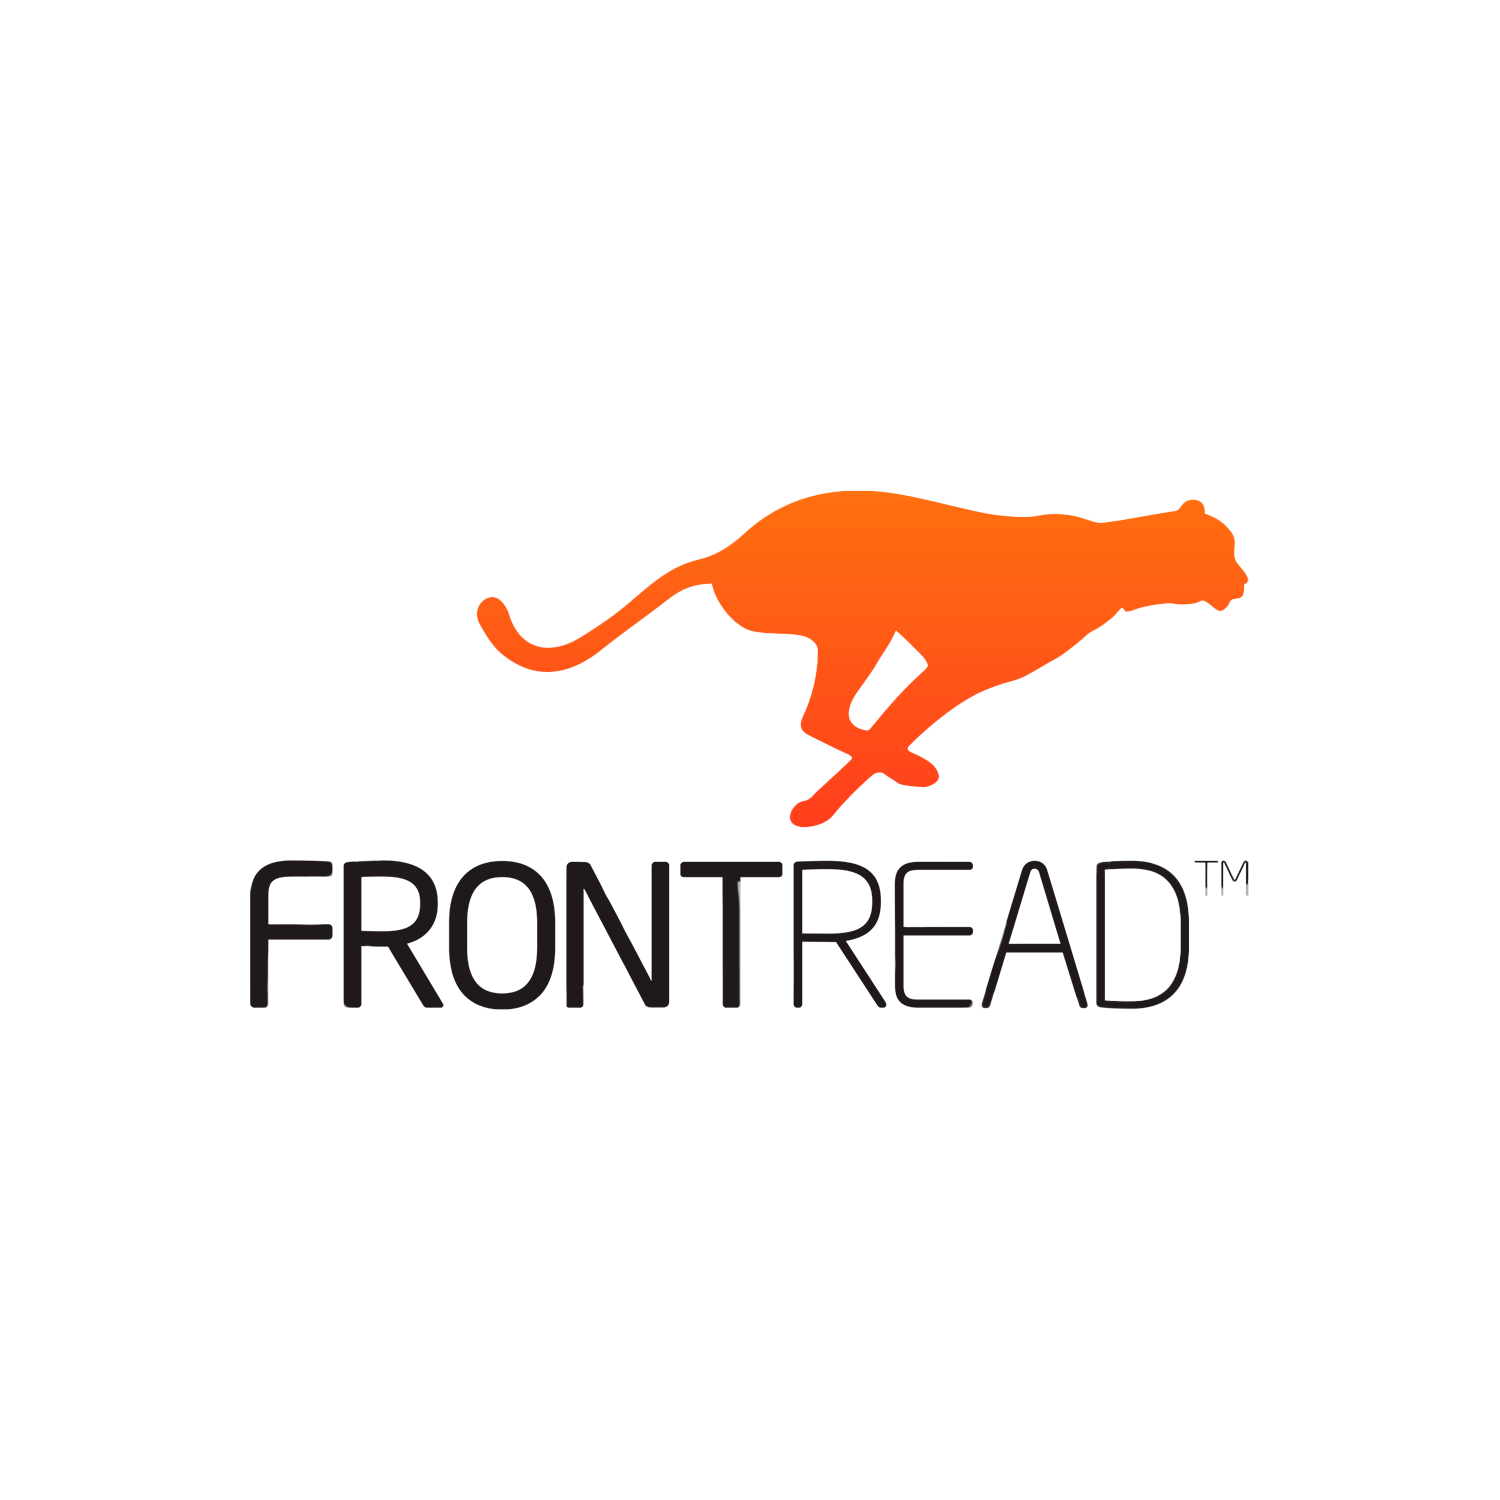 Frontread-2-1